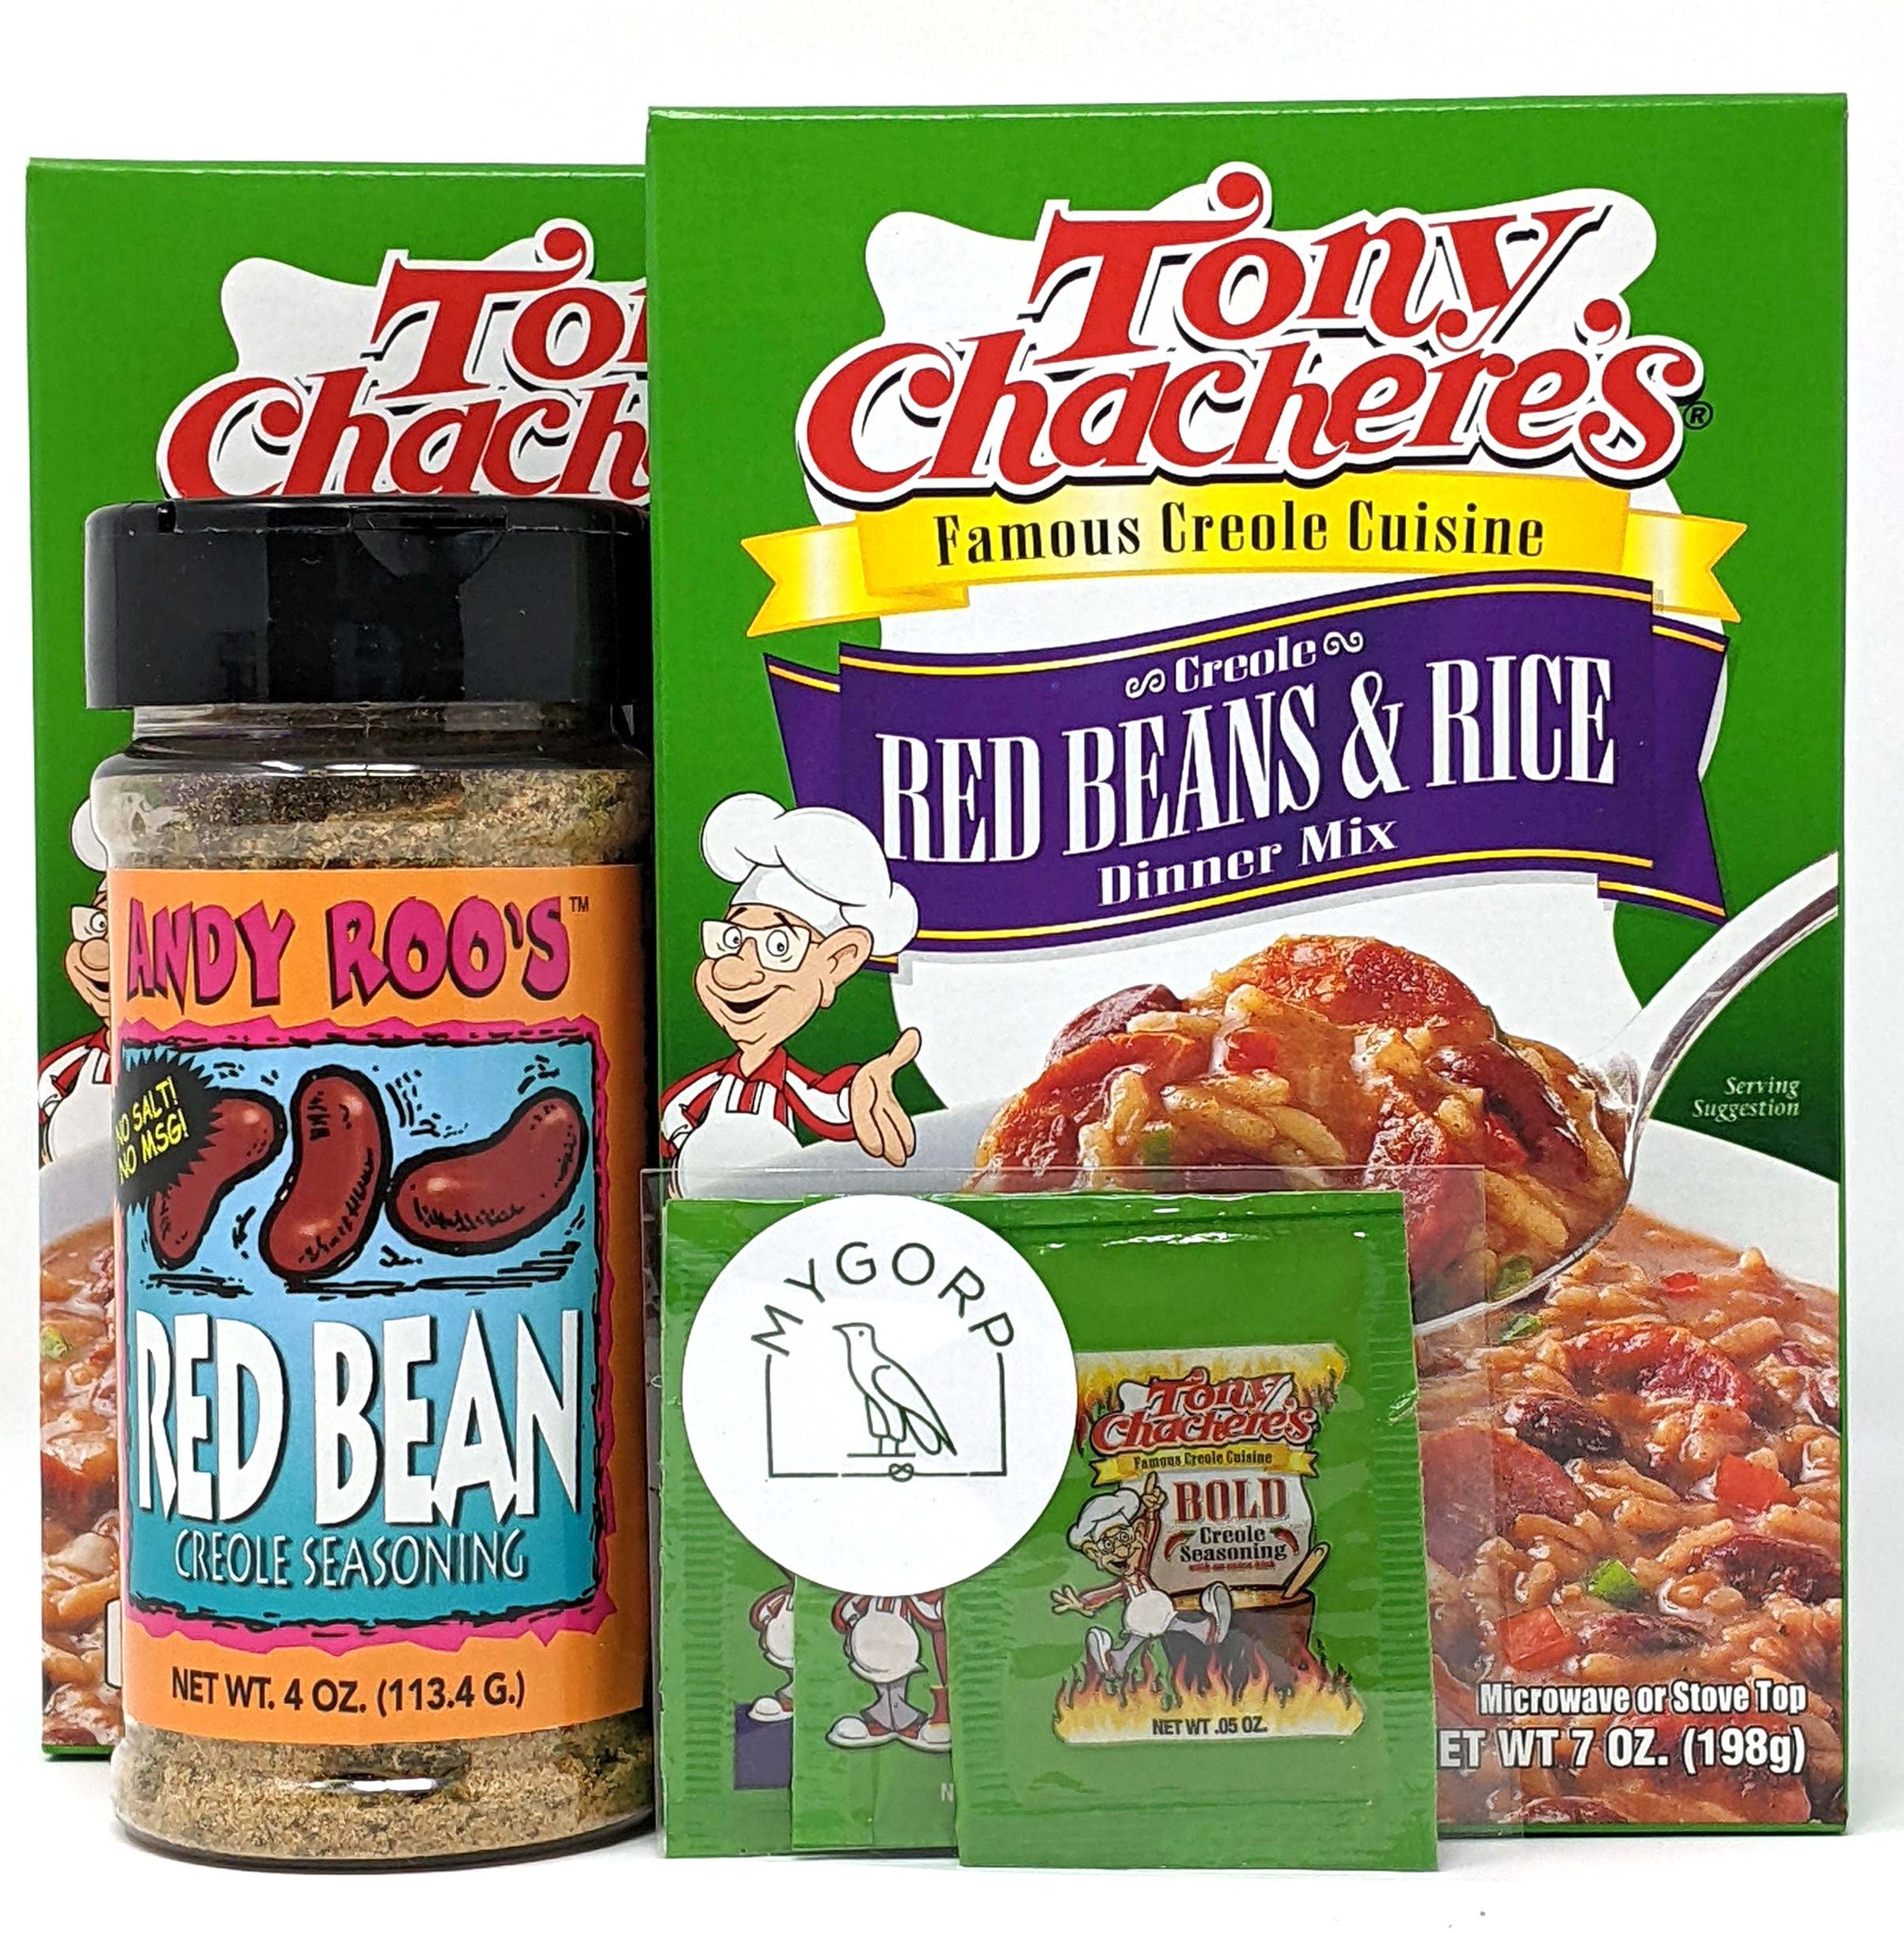 Tony Chachere's Original Creole Seasoning Case